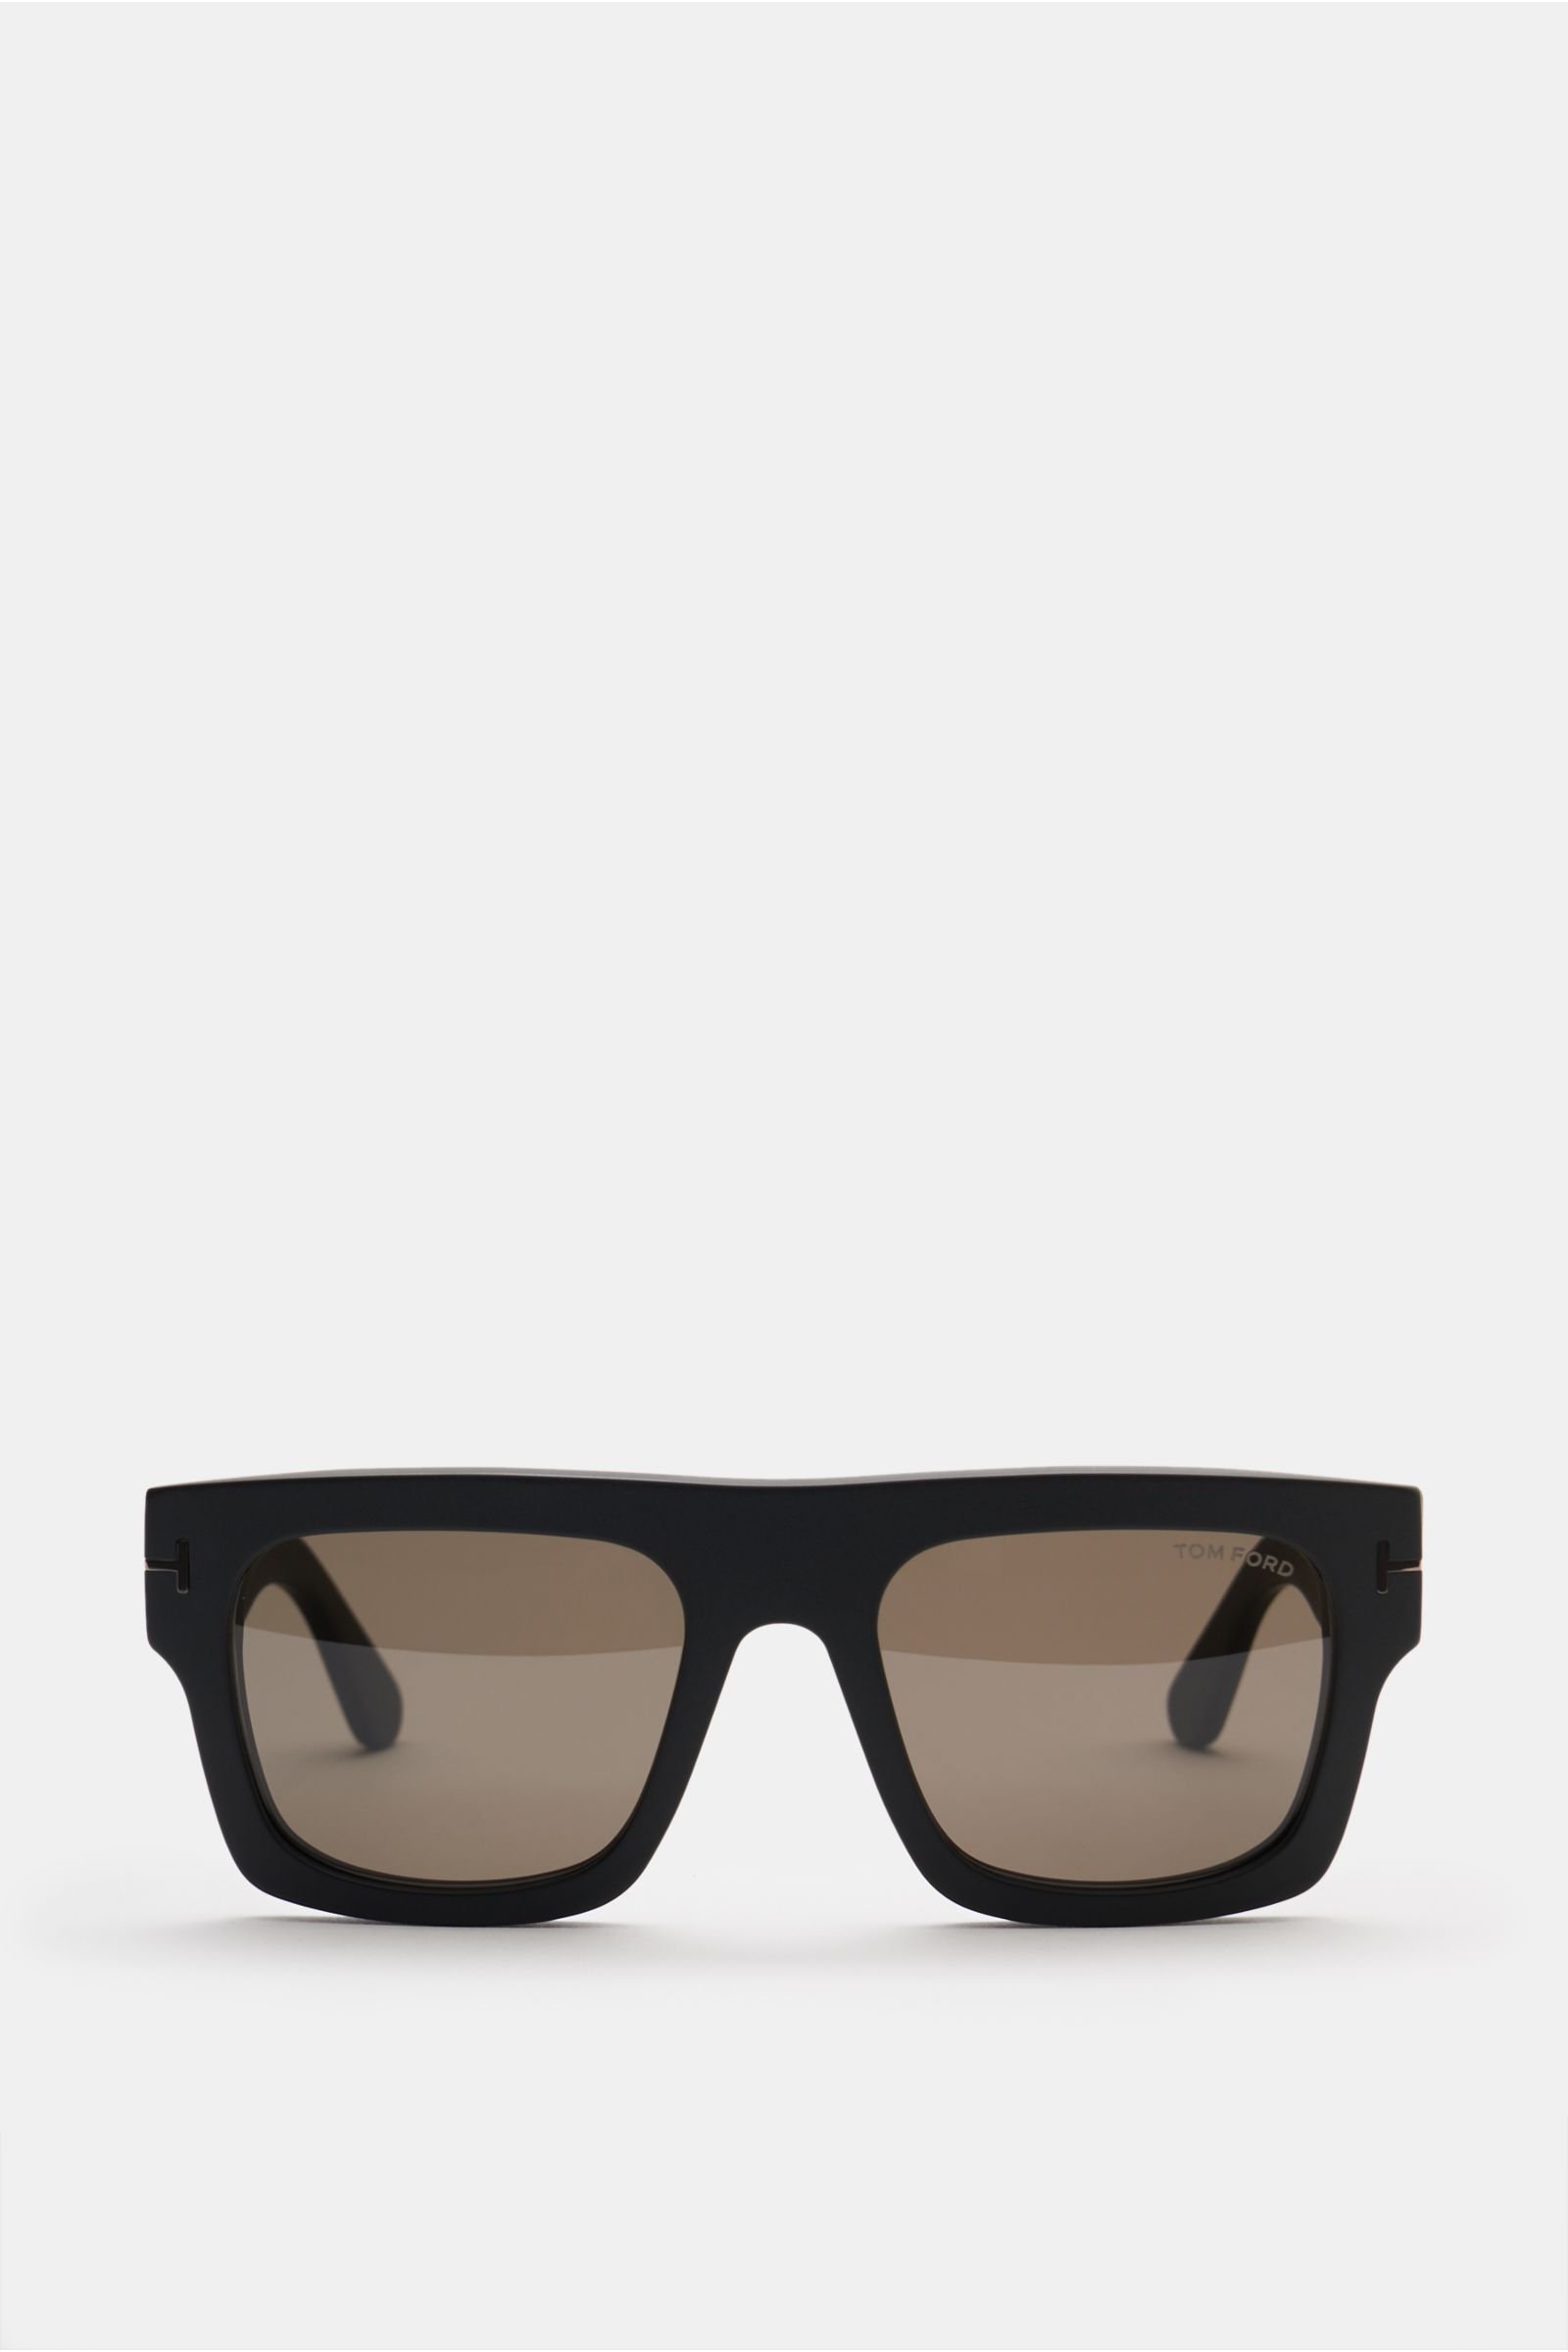 Sunglasses 'Fausto' black/grey